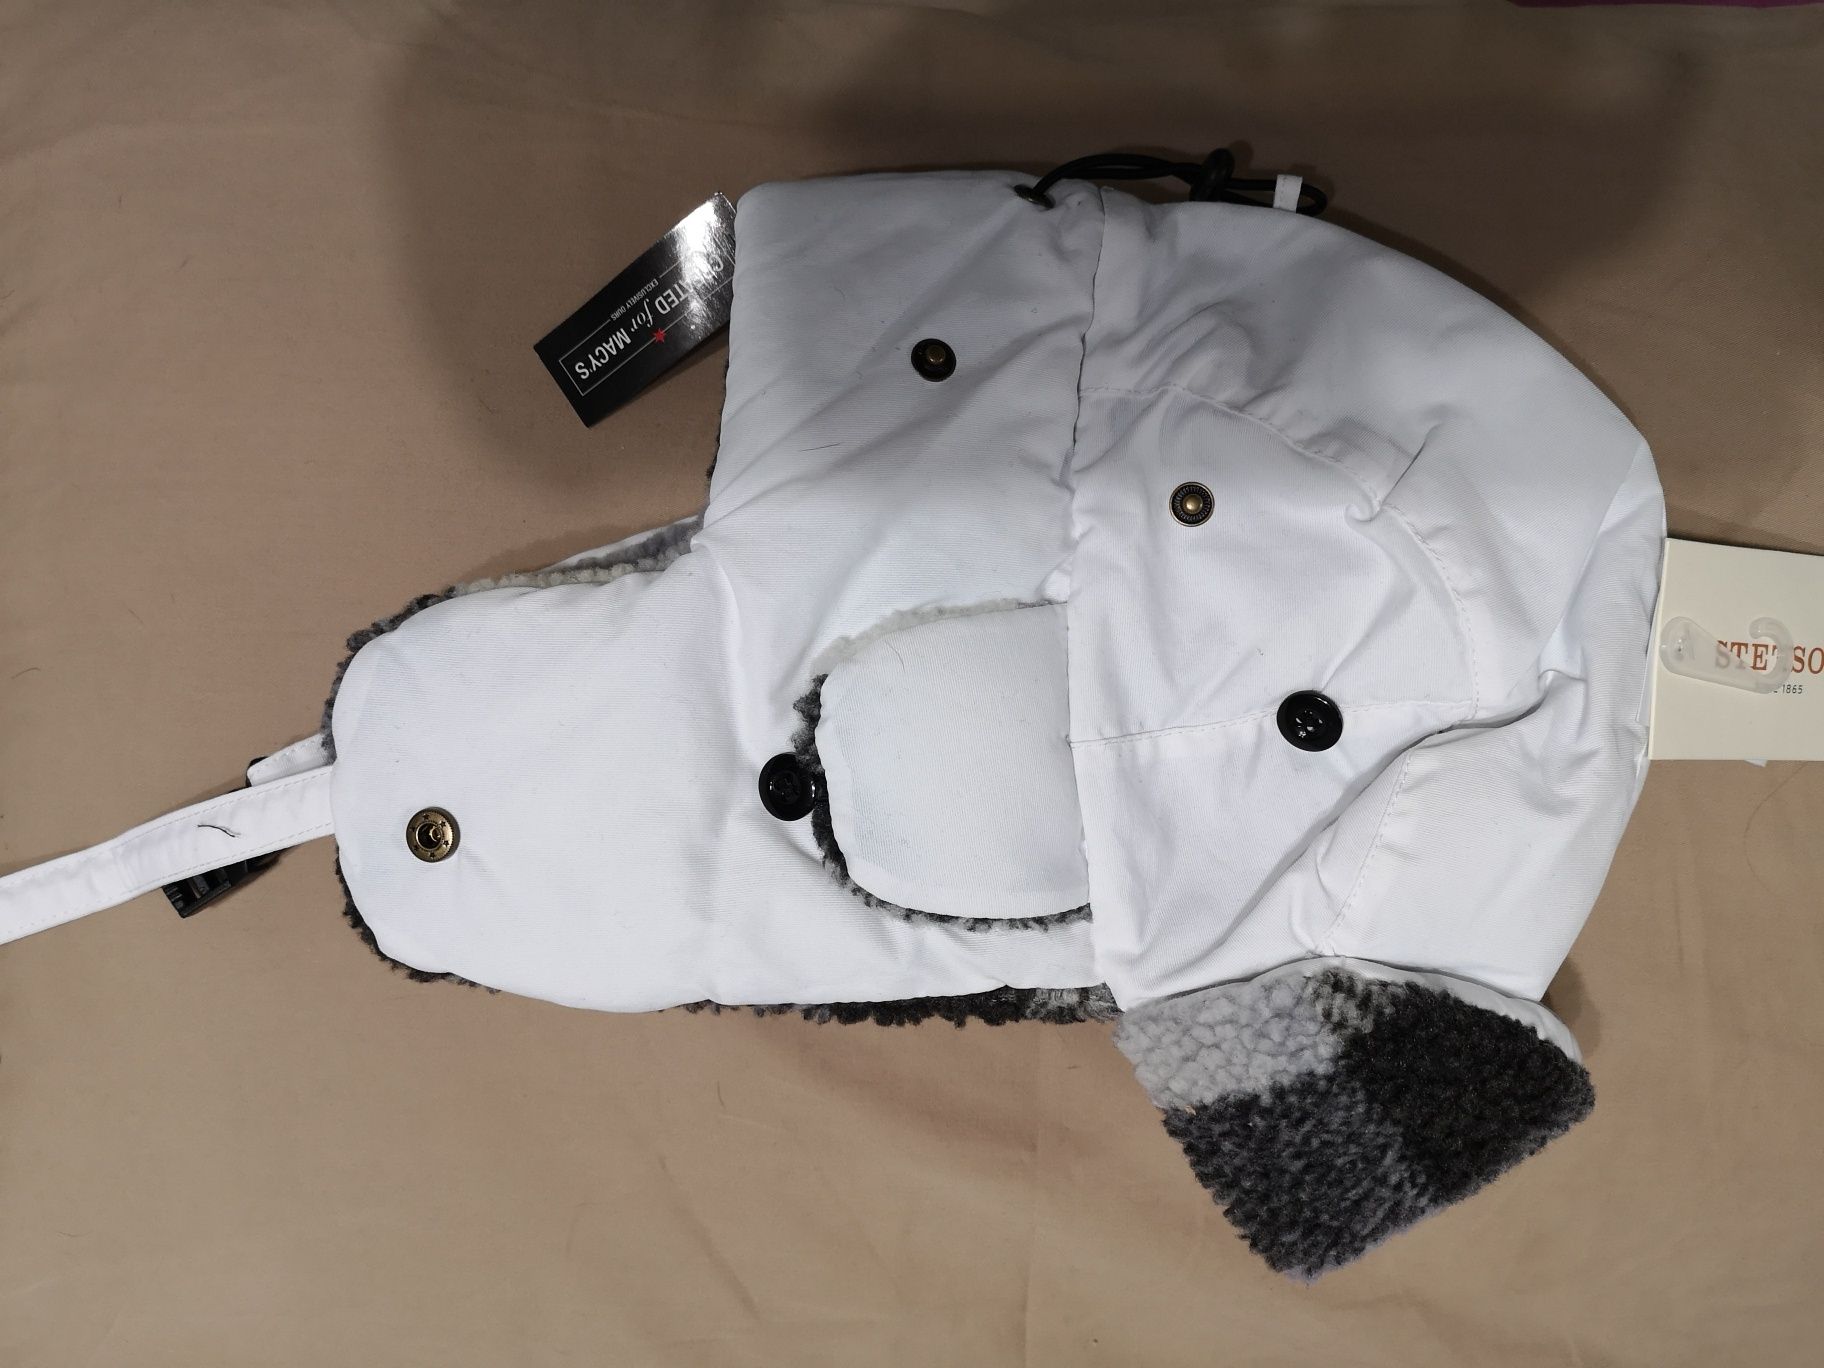 Мужская шапка-ушанка Dorfman Pacific, белого цвета,Stetson, США